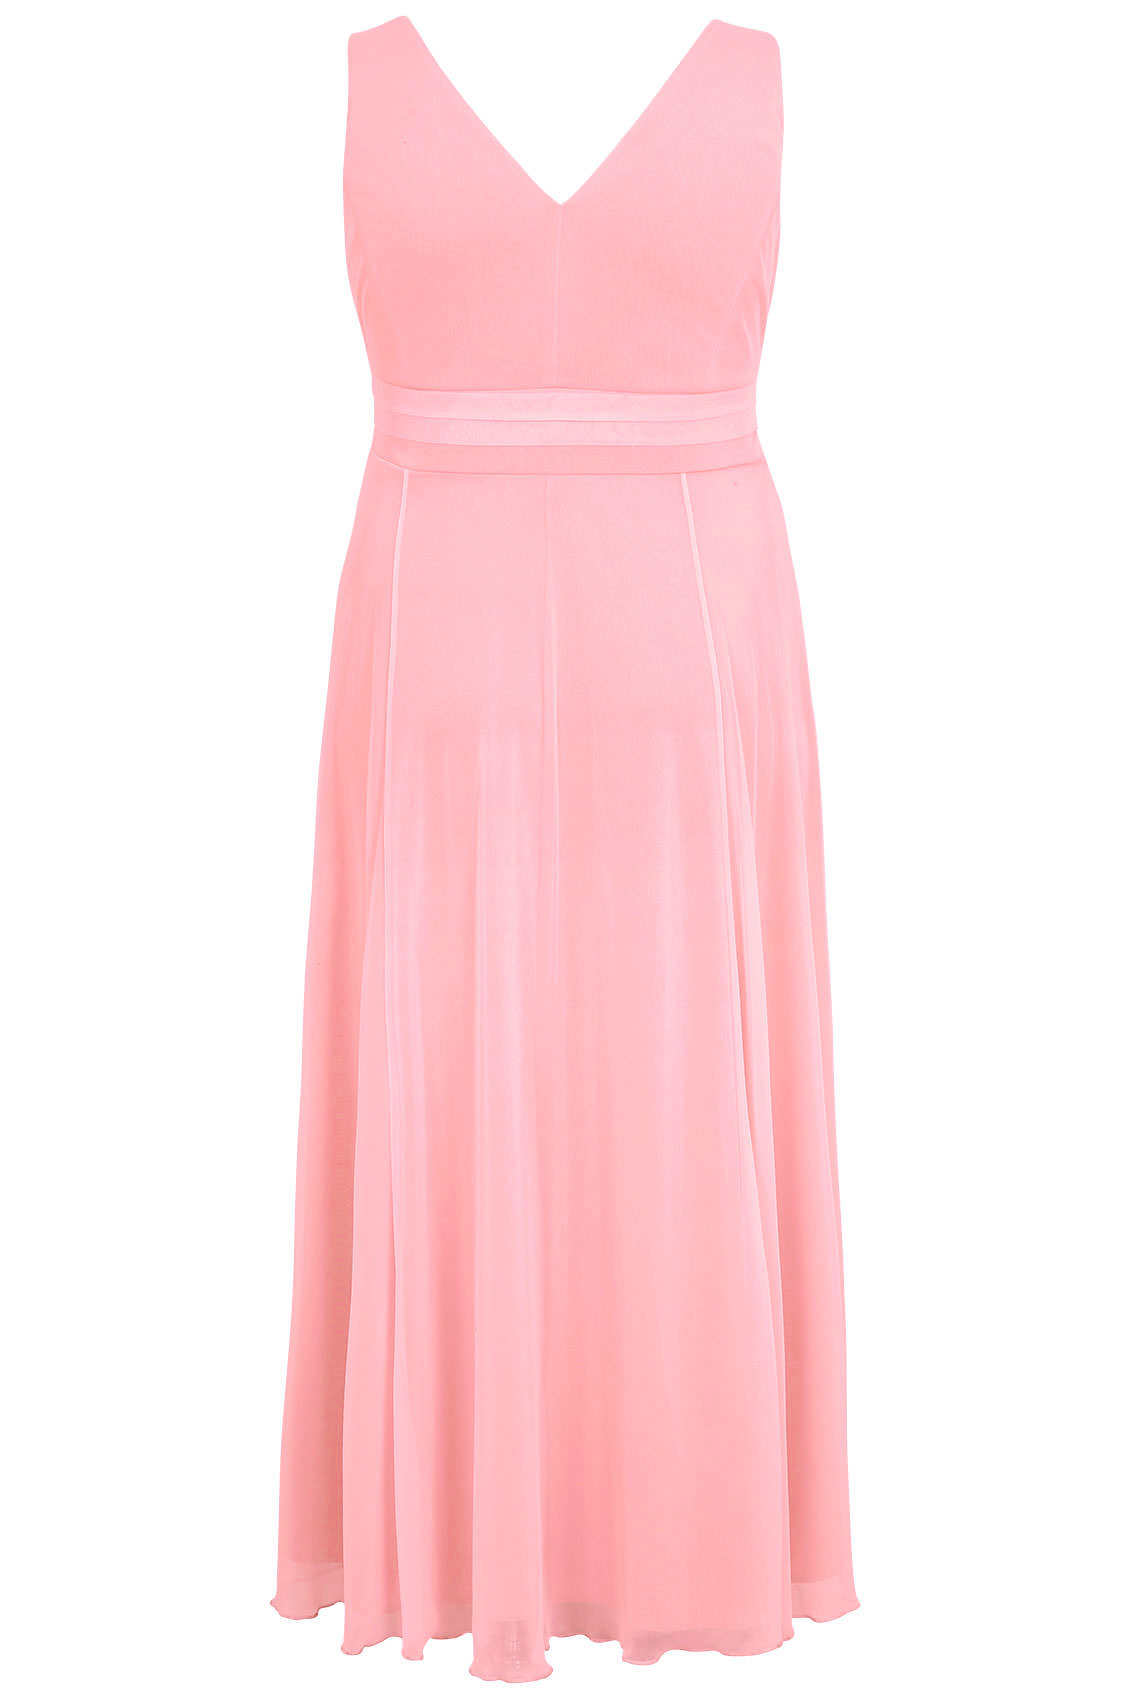 SCARLETT & JO Rose Pink Marilyn Wrap Front Maxi Dress, Plus size 16 to 32